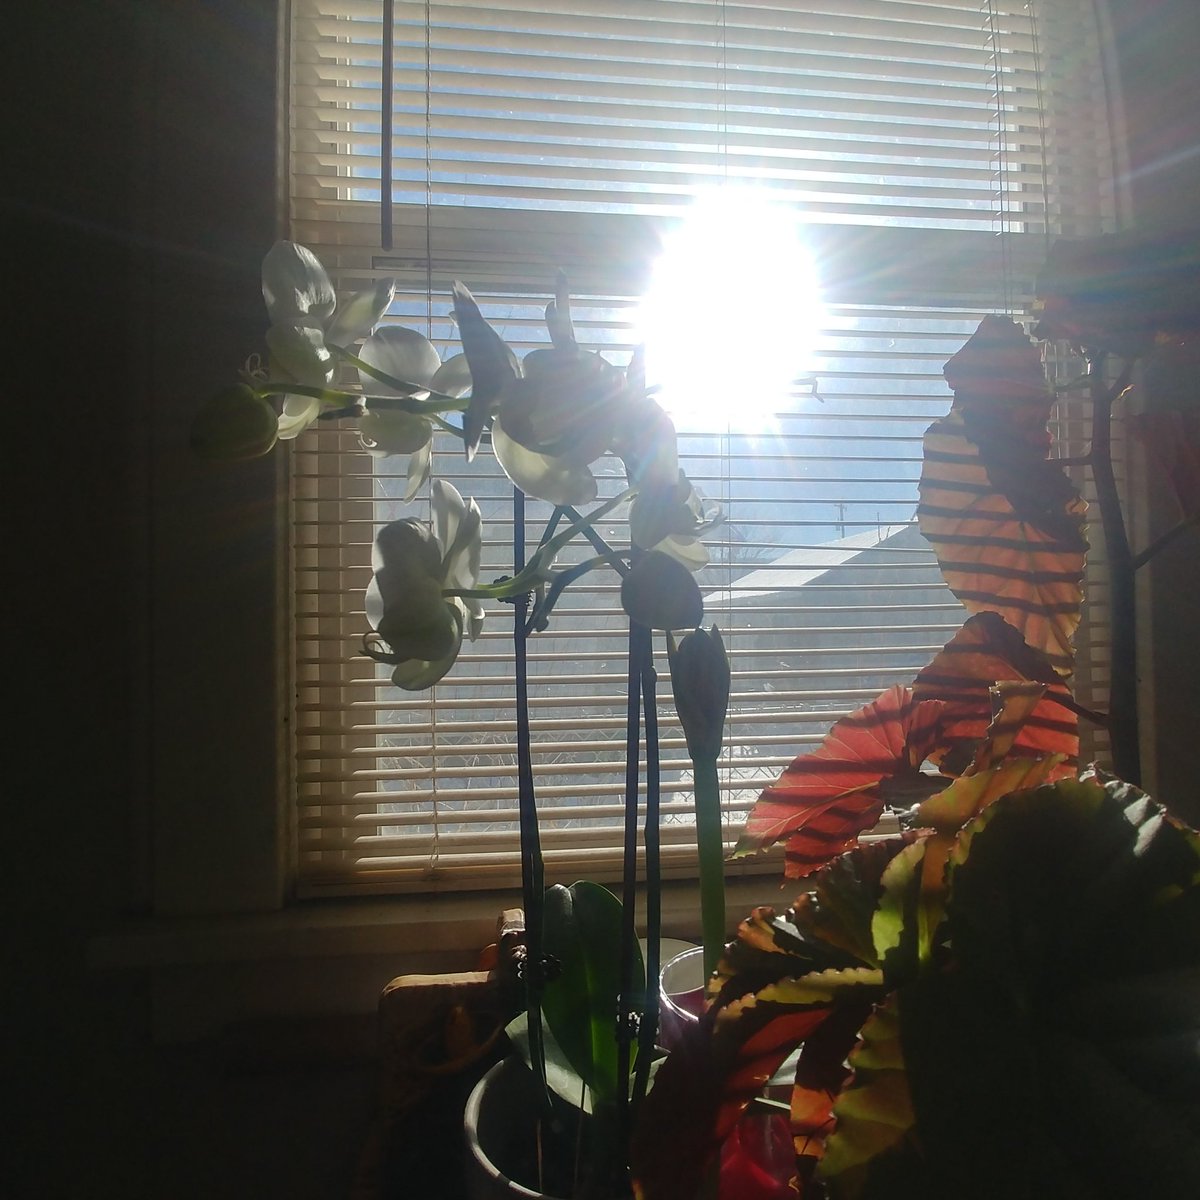 House plants enjoying the extra light reflected off the snow.
#WhiteOrchid 
#AngelWingBegonia
#Amaryllis